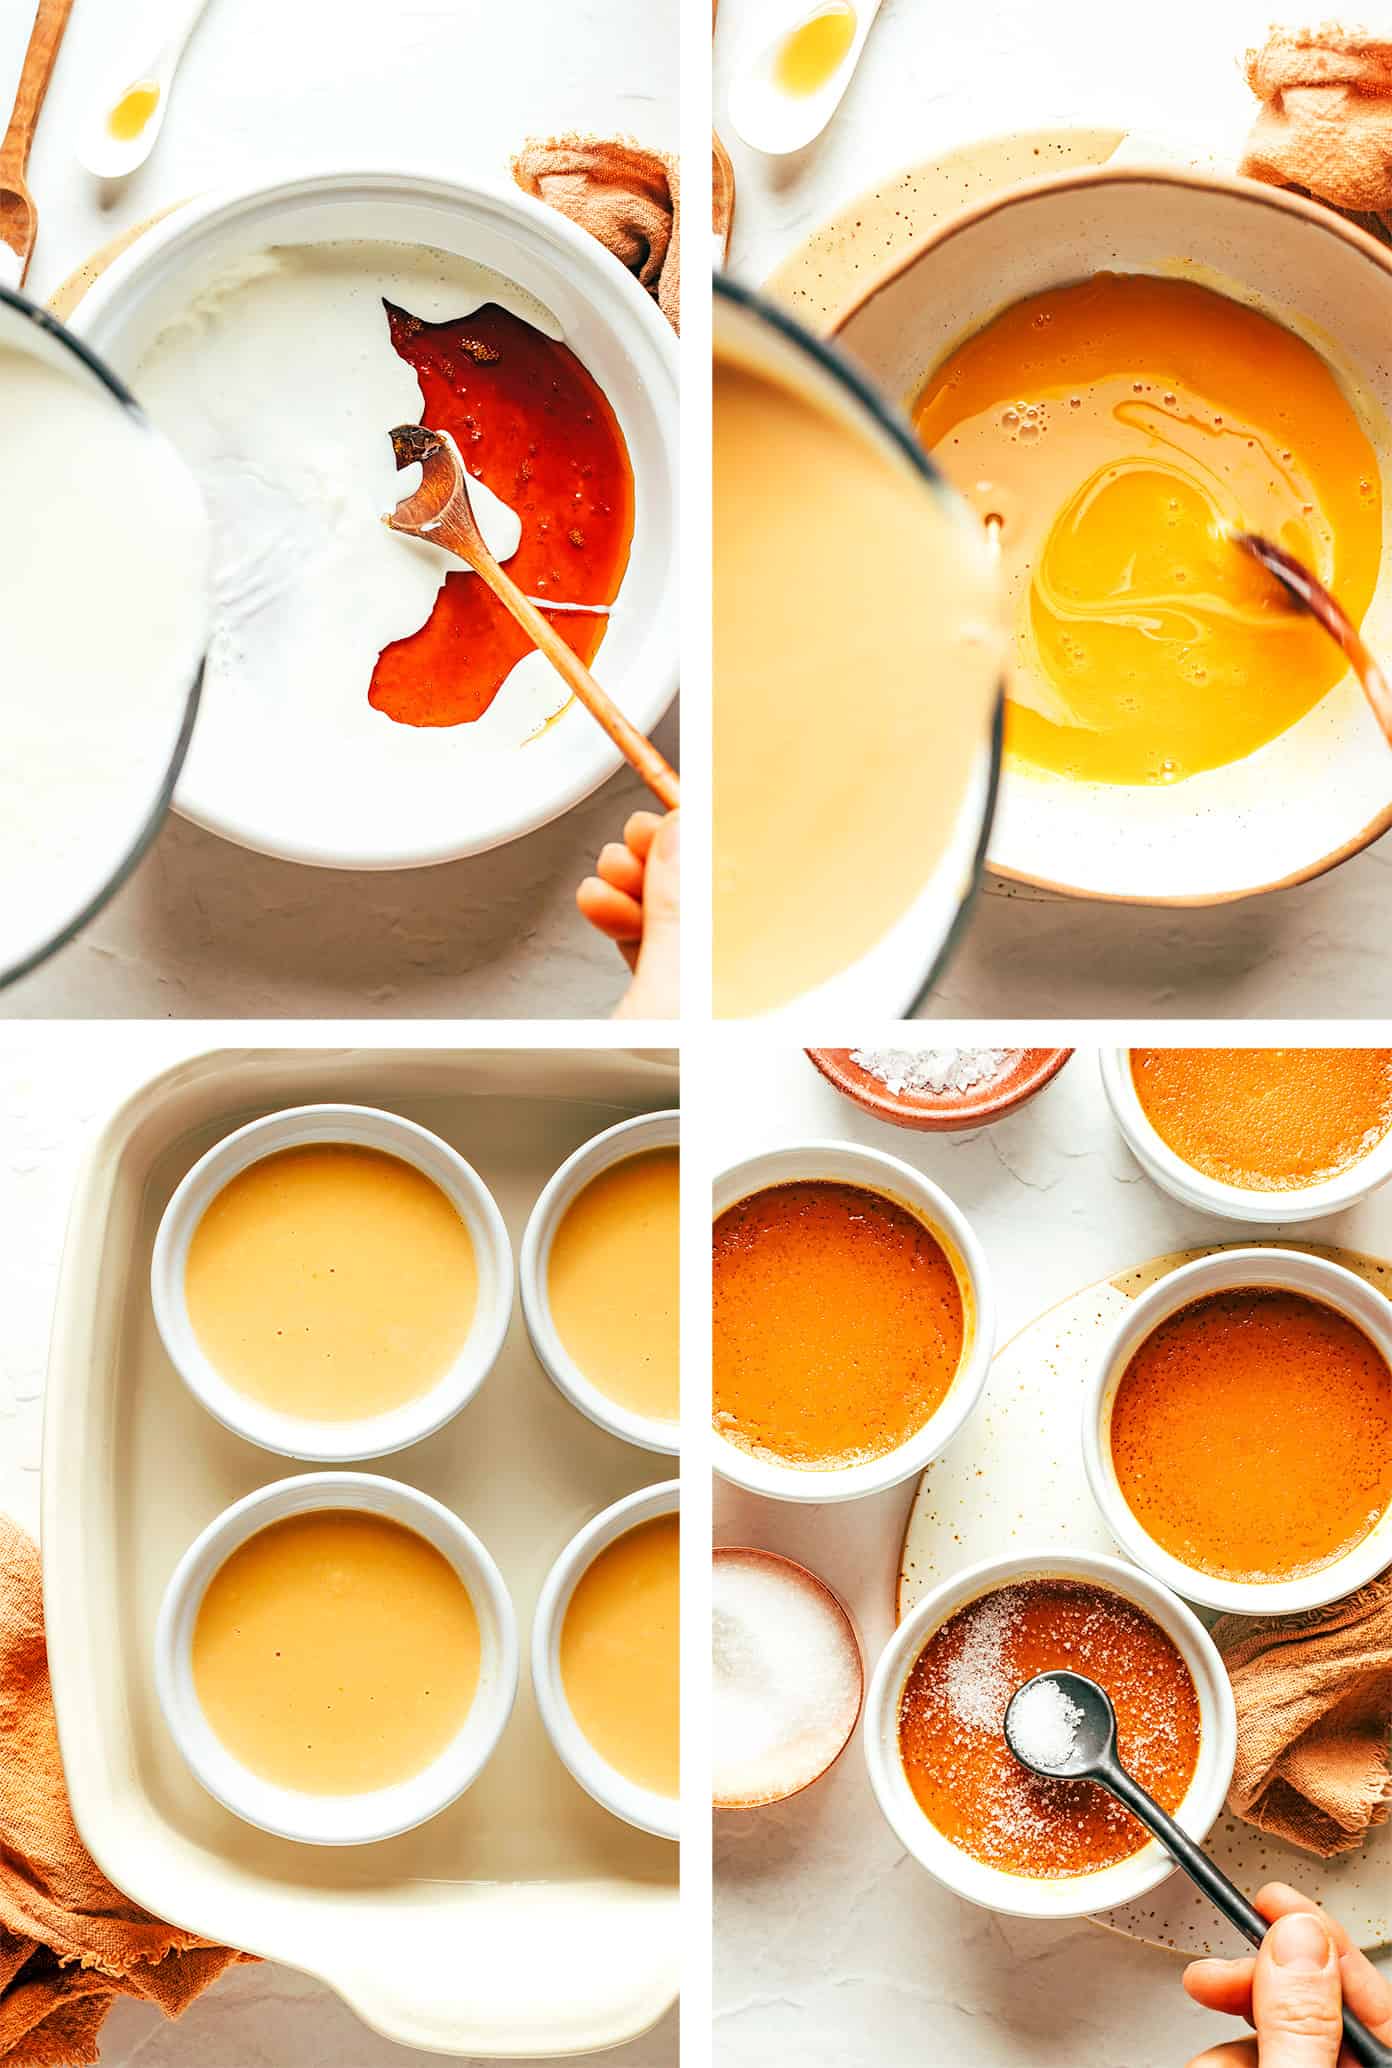 Step by step photos for how to make crème brûlée